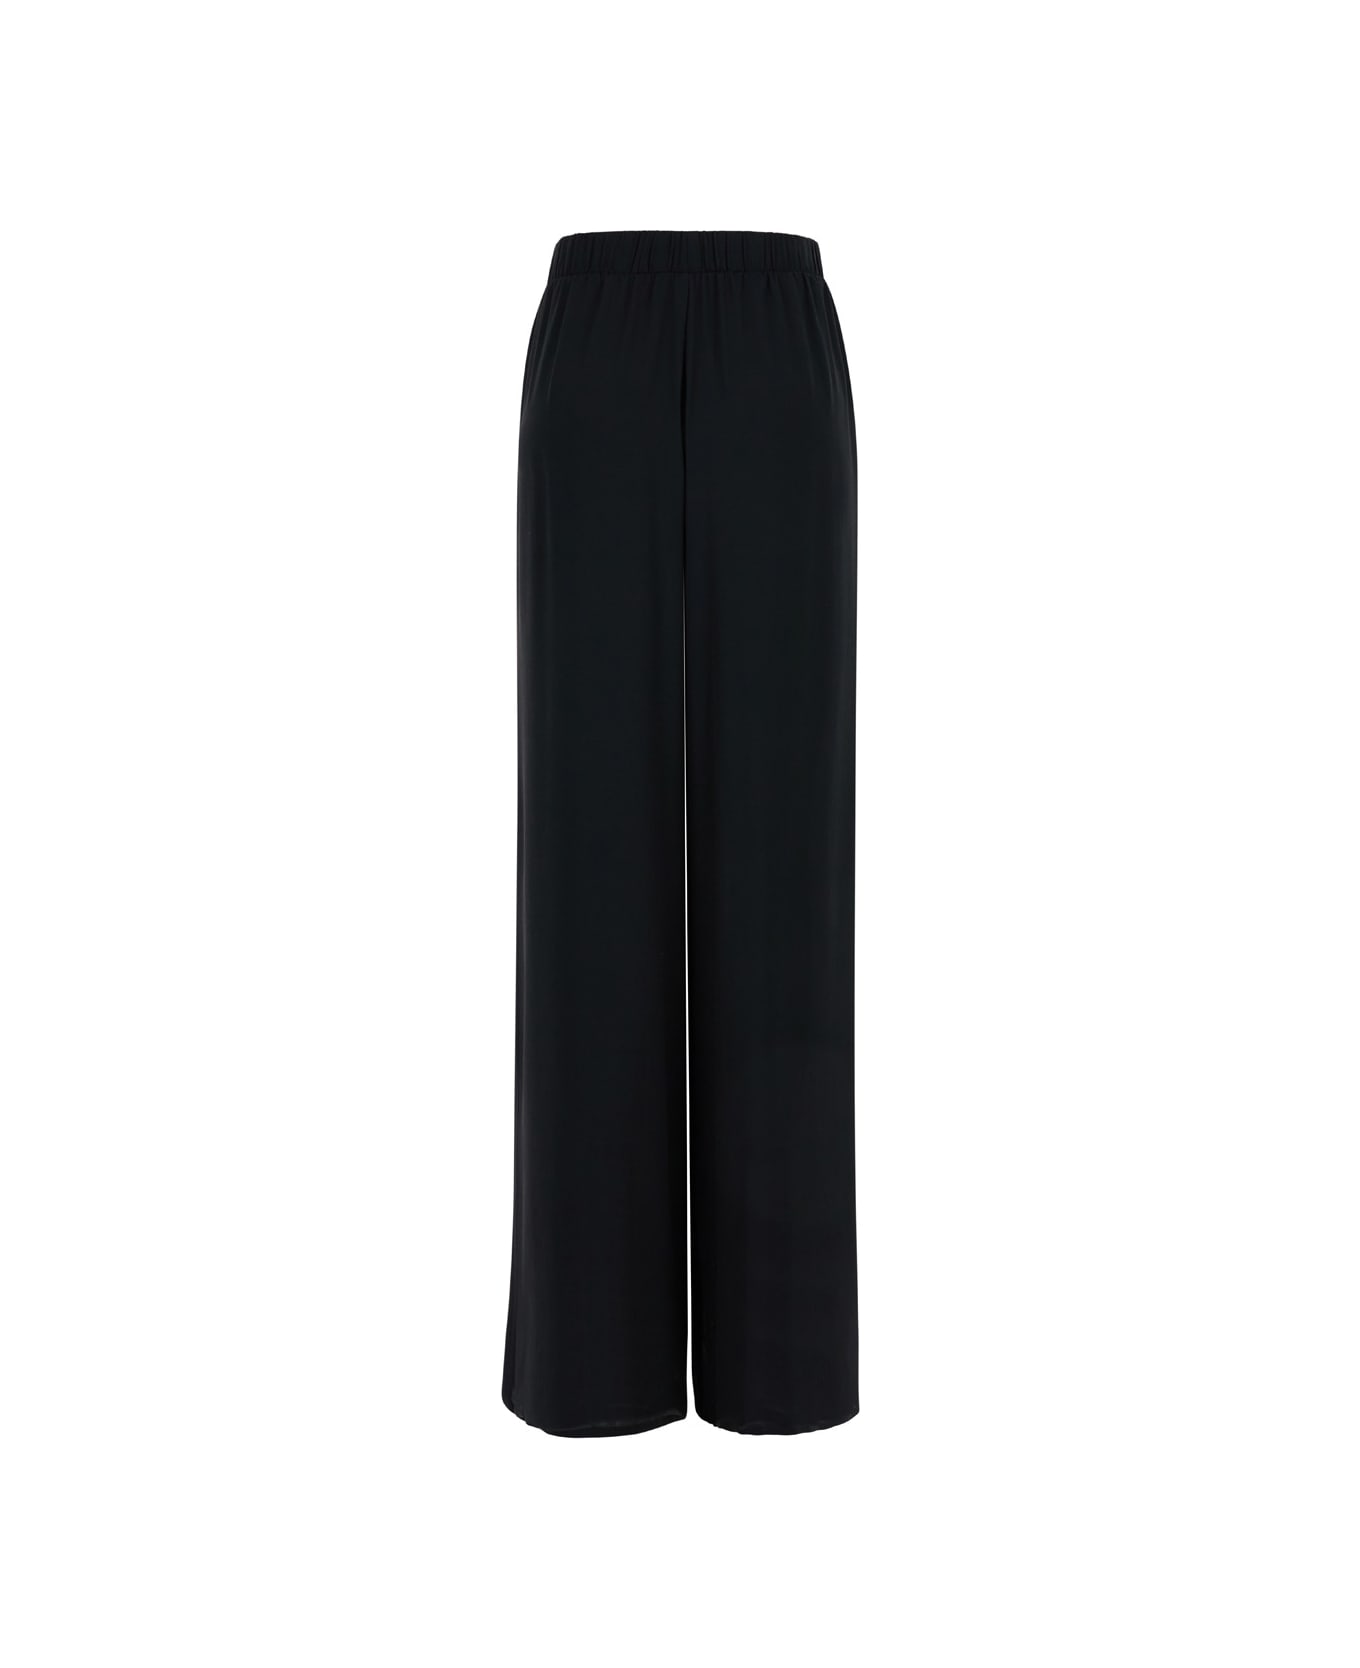 Federica Tosi Black Trousers With Elastic Waistband In Silk Blend Woman - Black